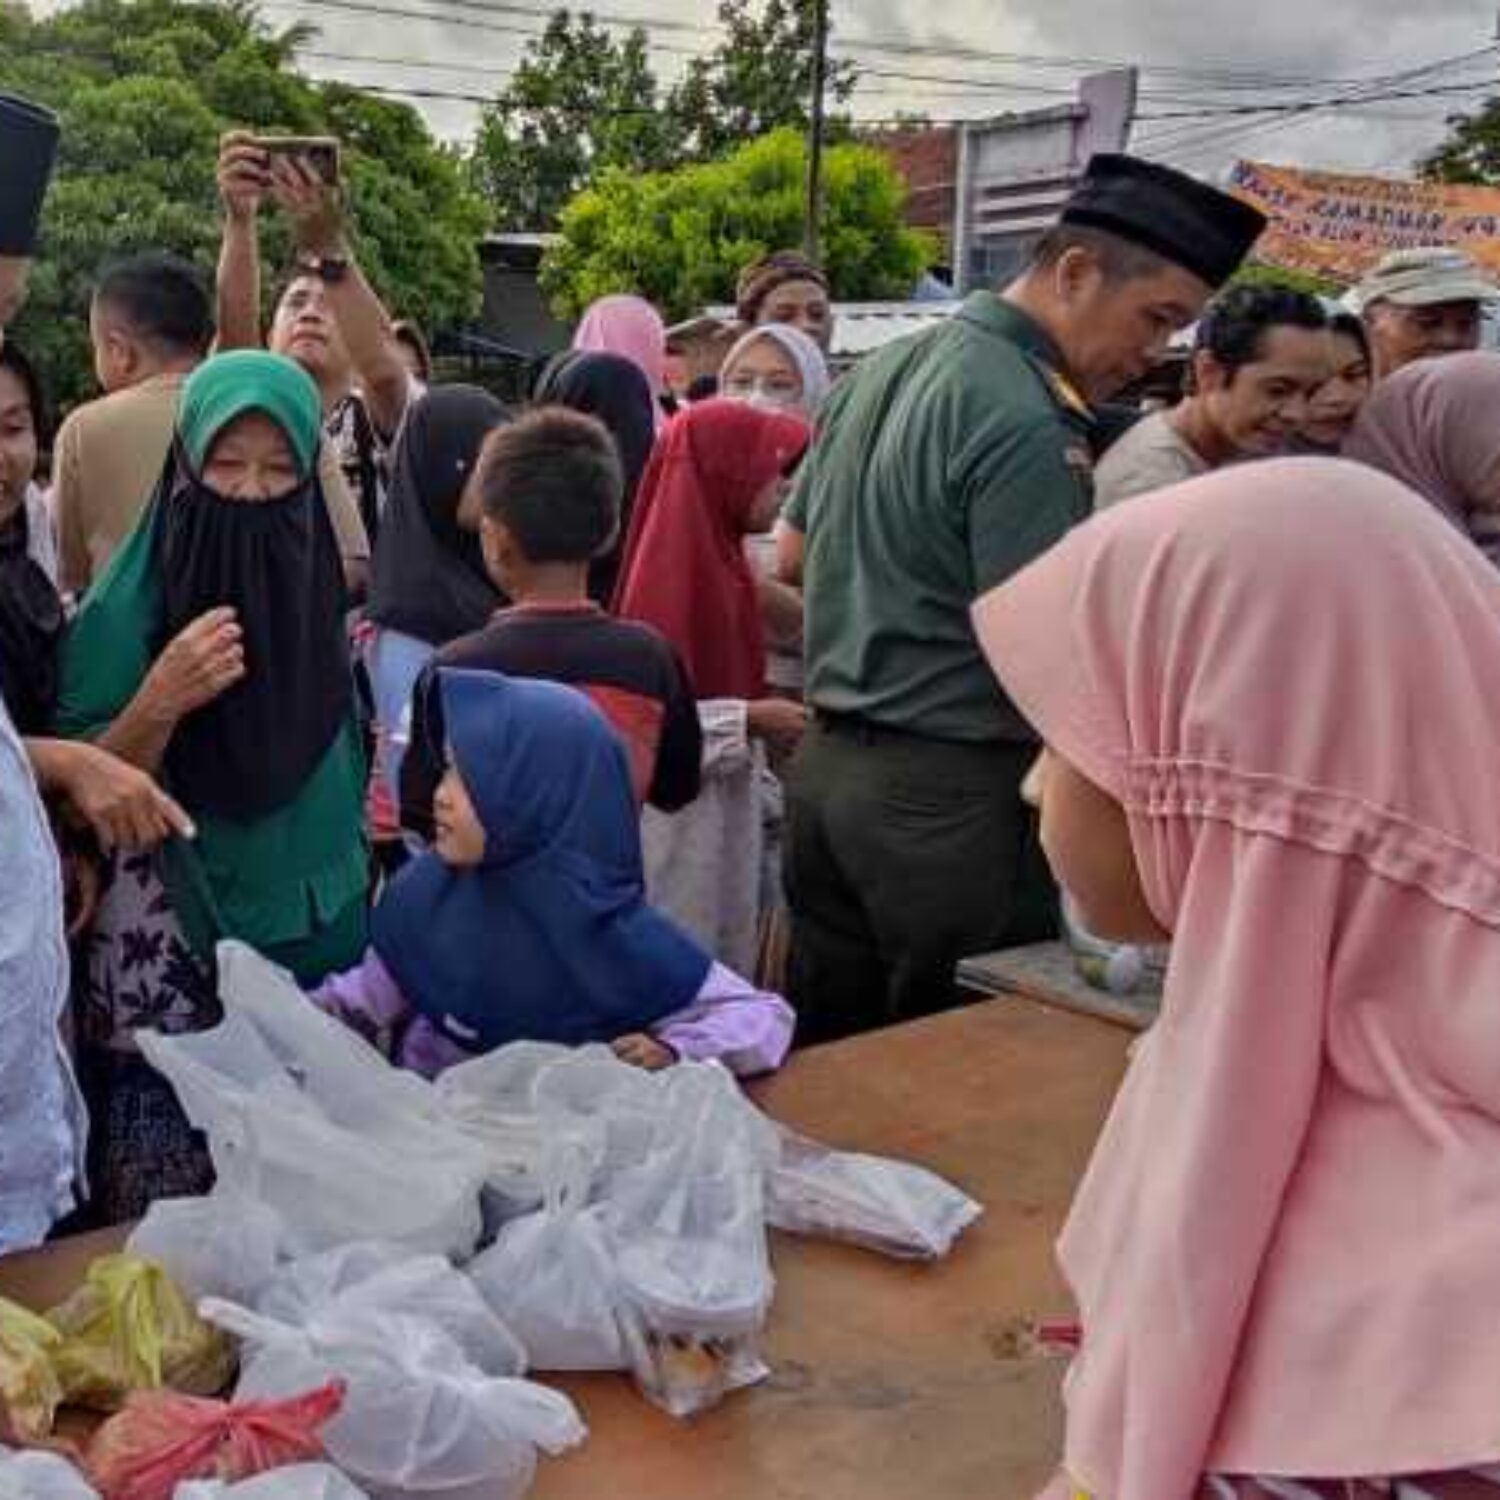 Dadang Okta Borong dan Bagikan Ribuan Takjil di Bunderan Cijulang, Siapa Dia?